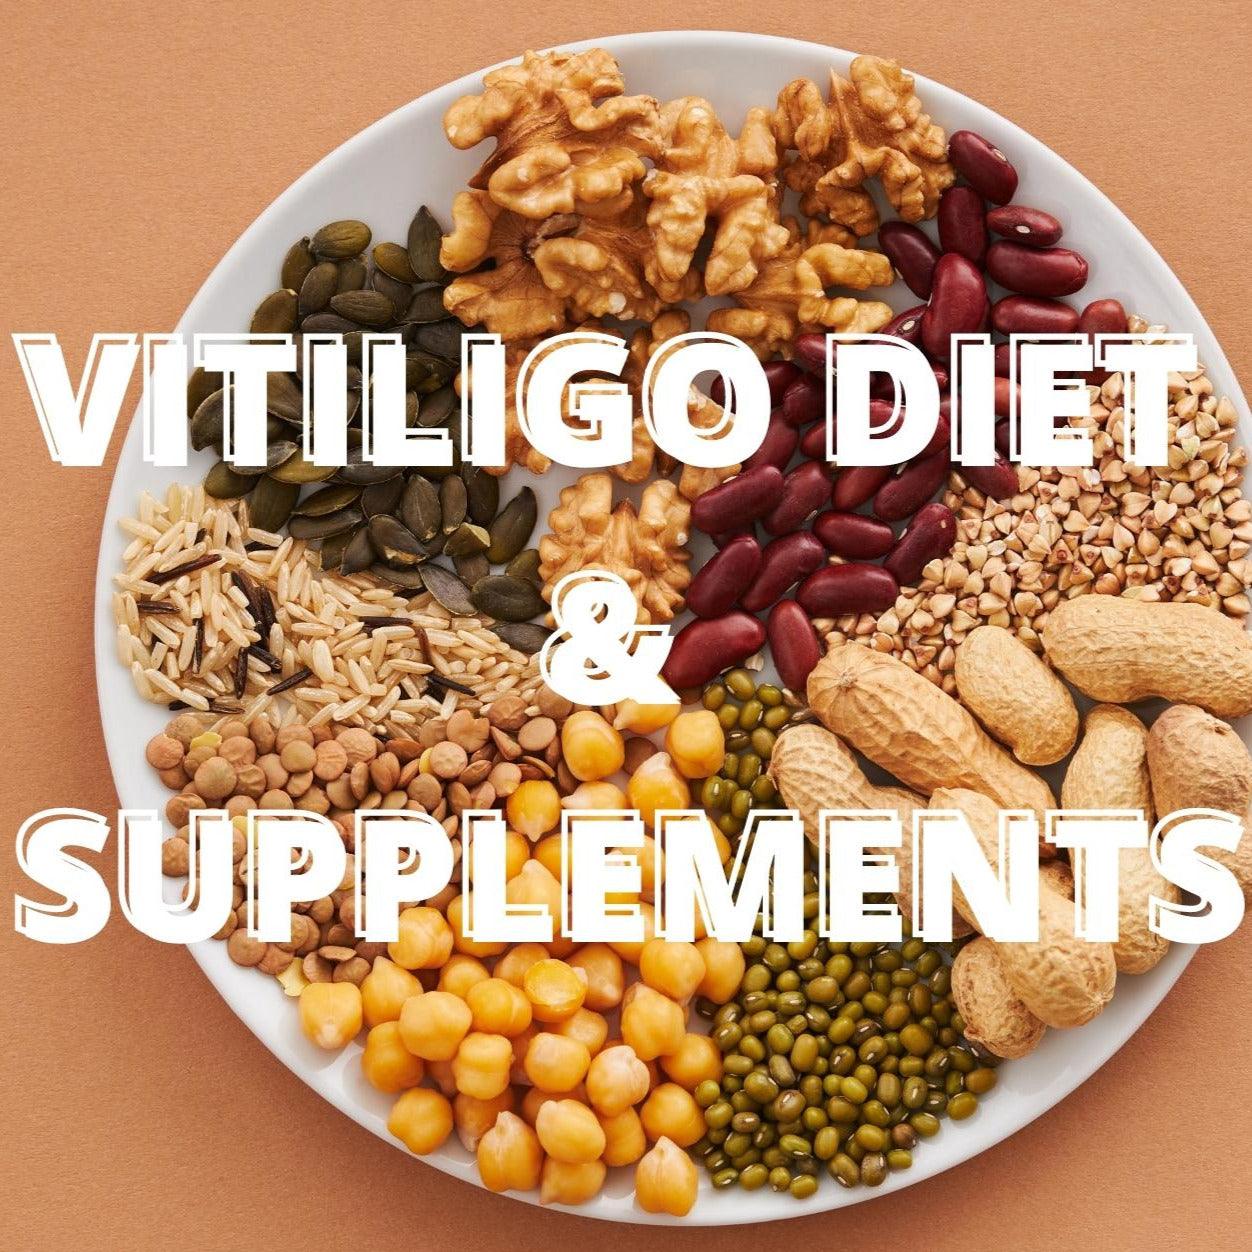 Food and Supplements in Vitiligo Diet